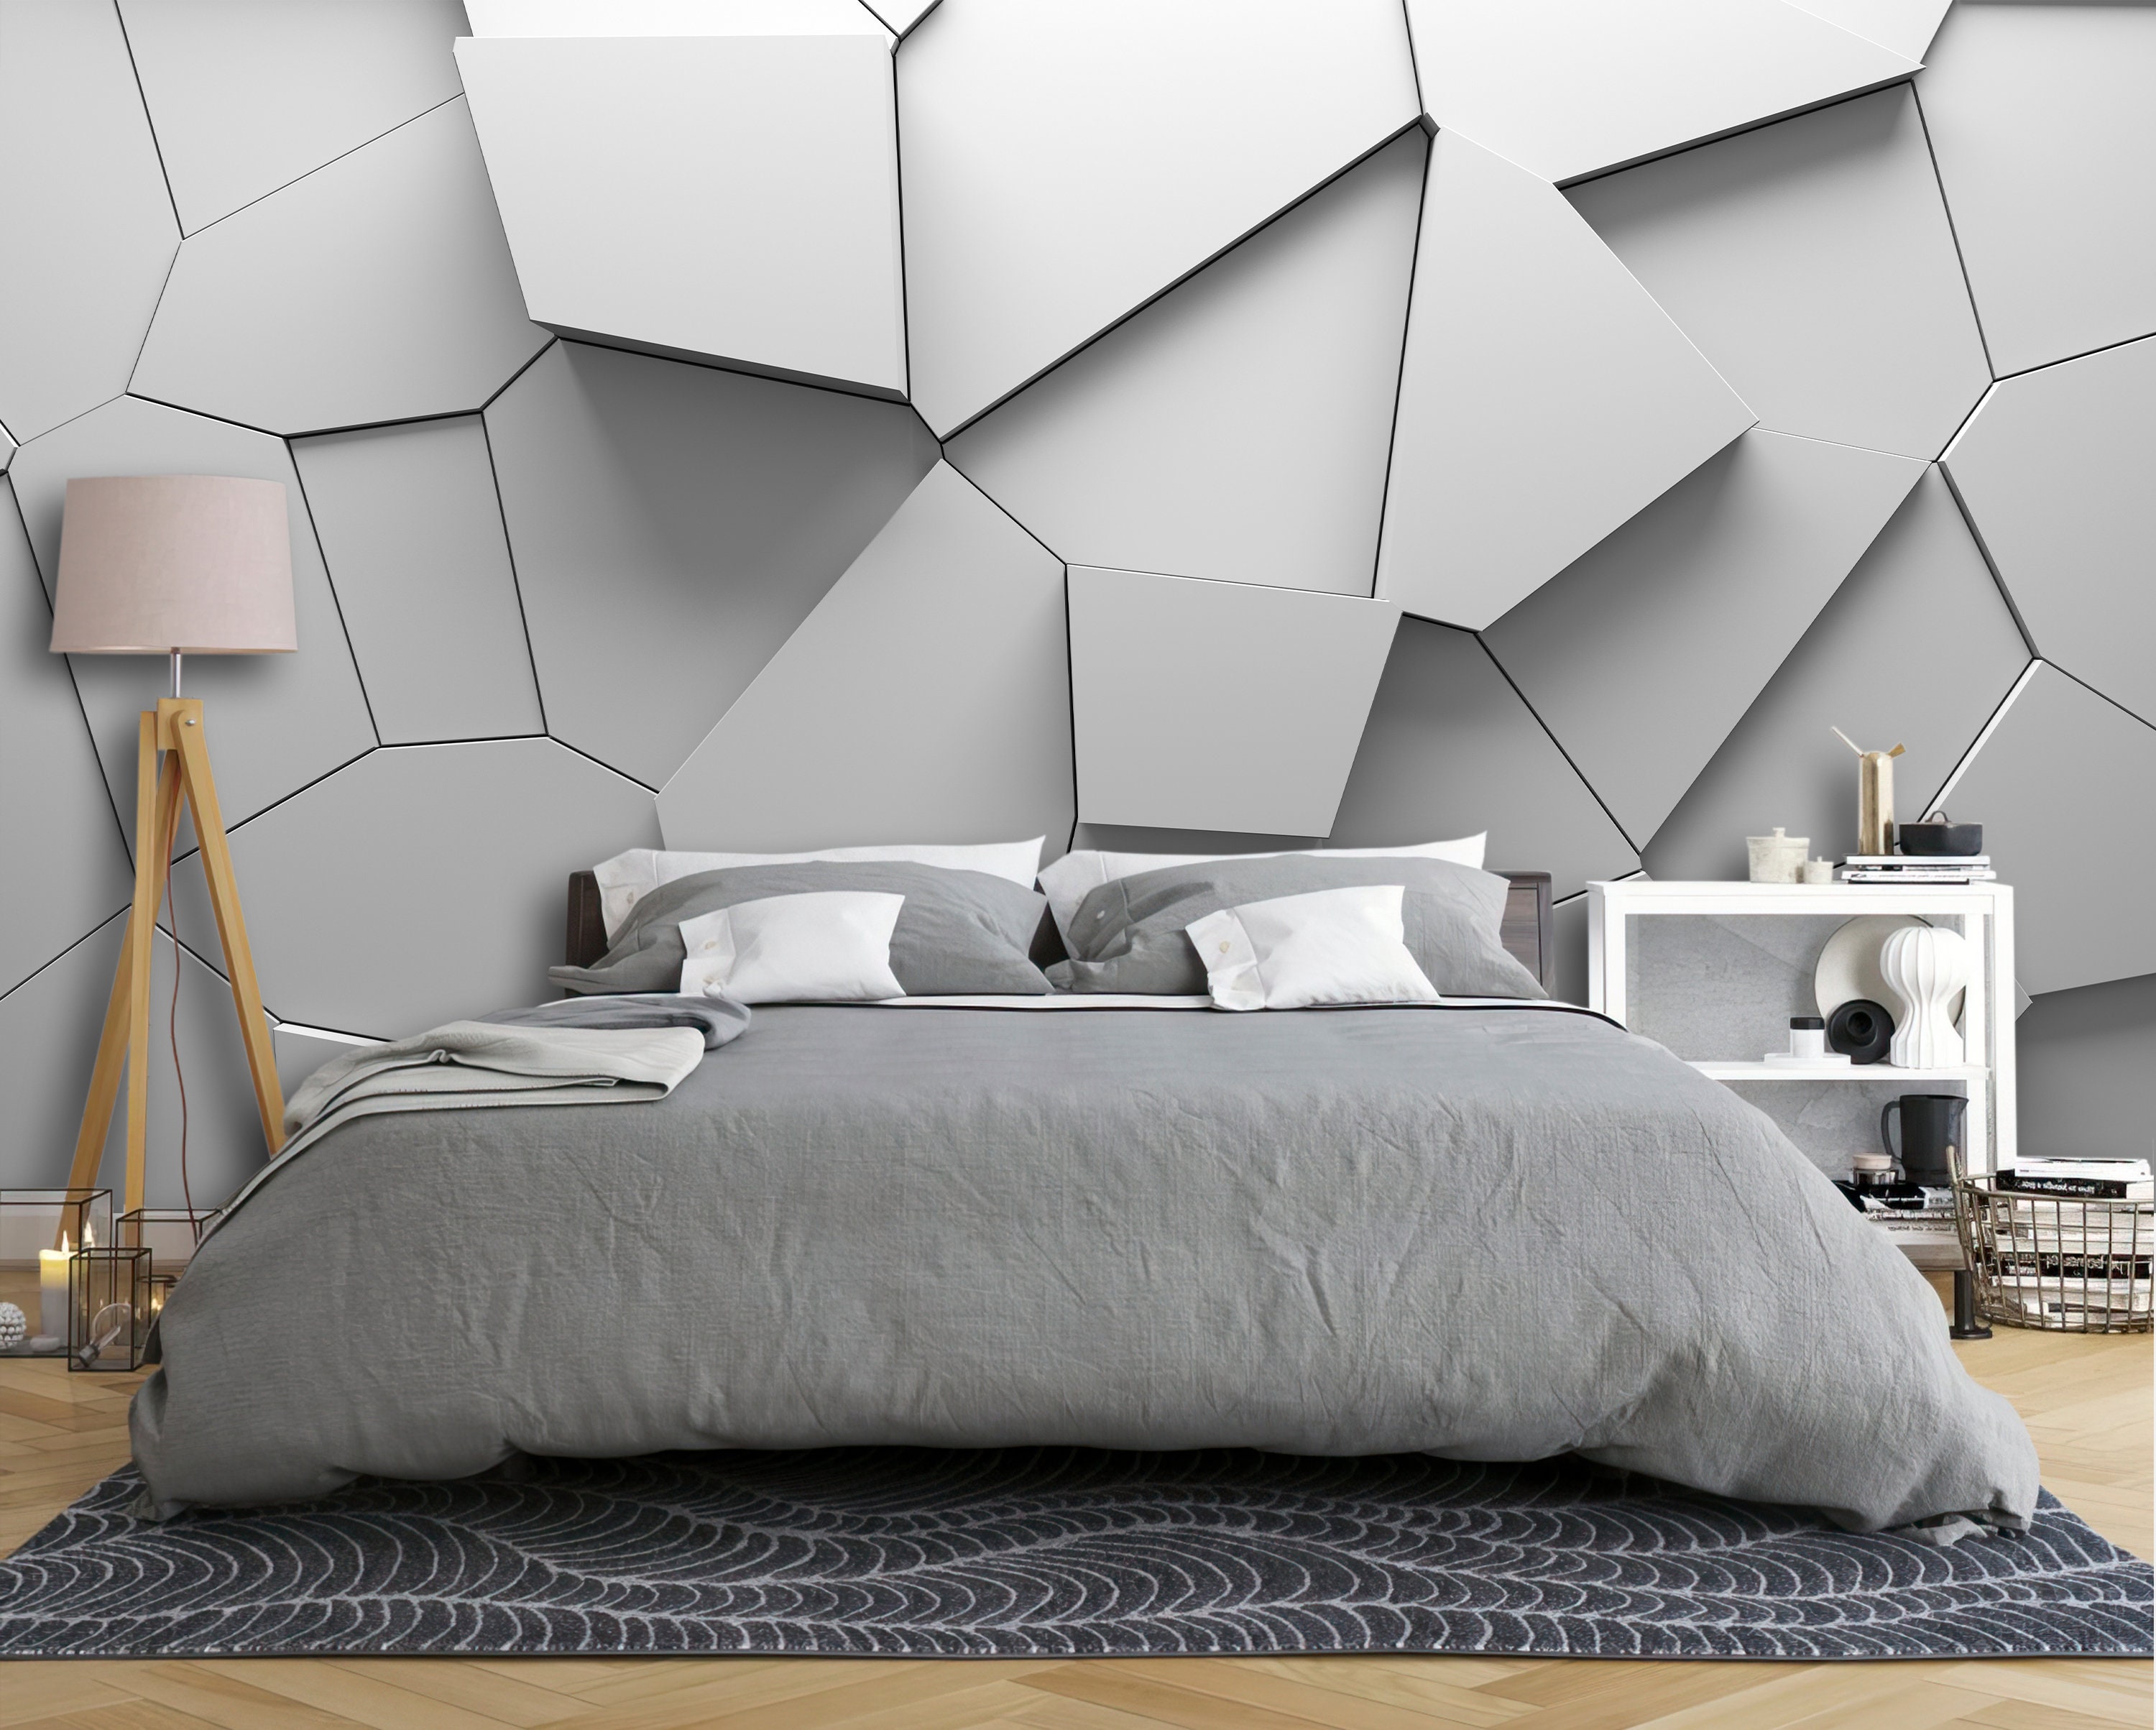 3D Wallpaper White Volumetric Polyhedrons Wall Art Mural - Etsy